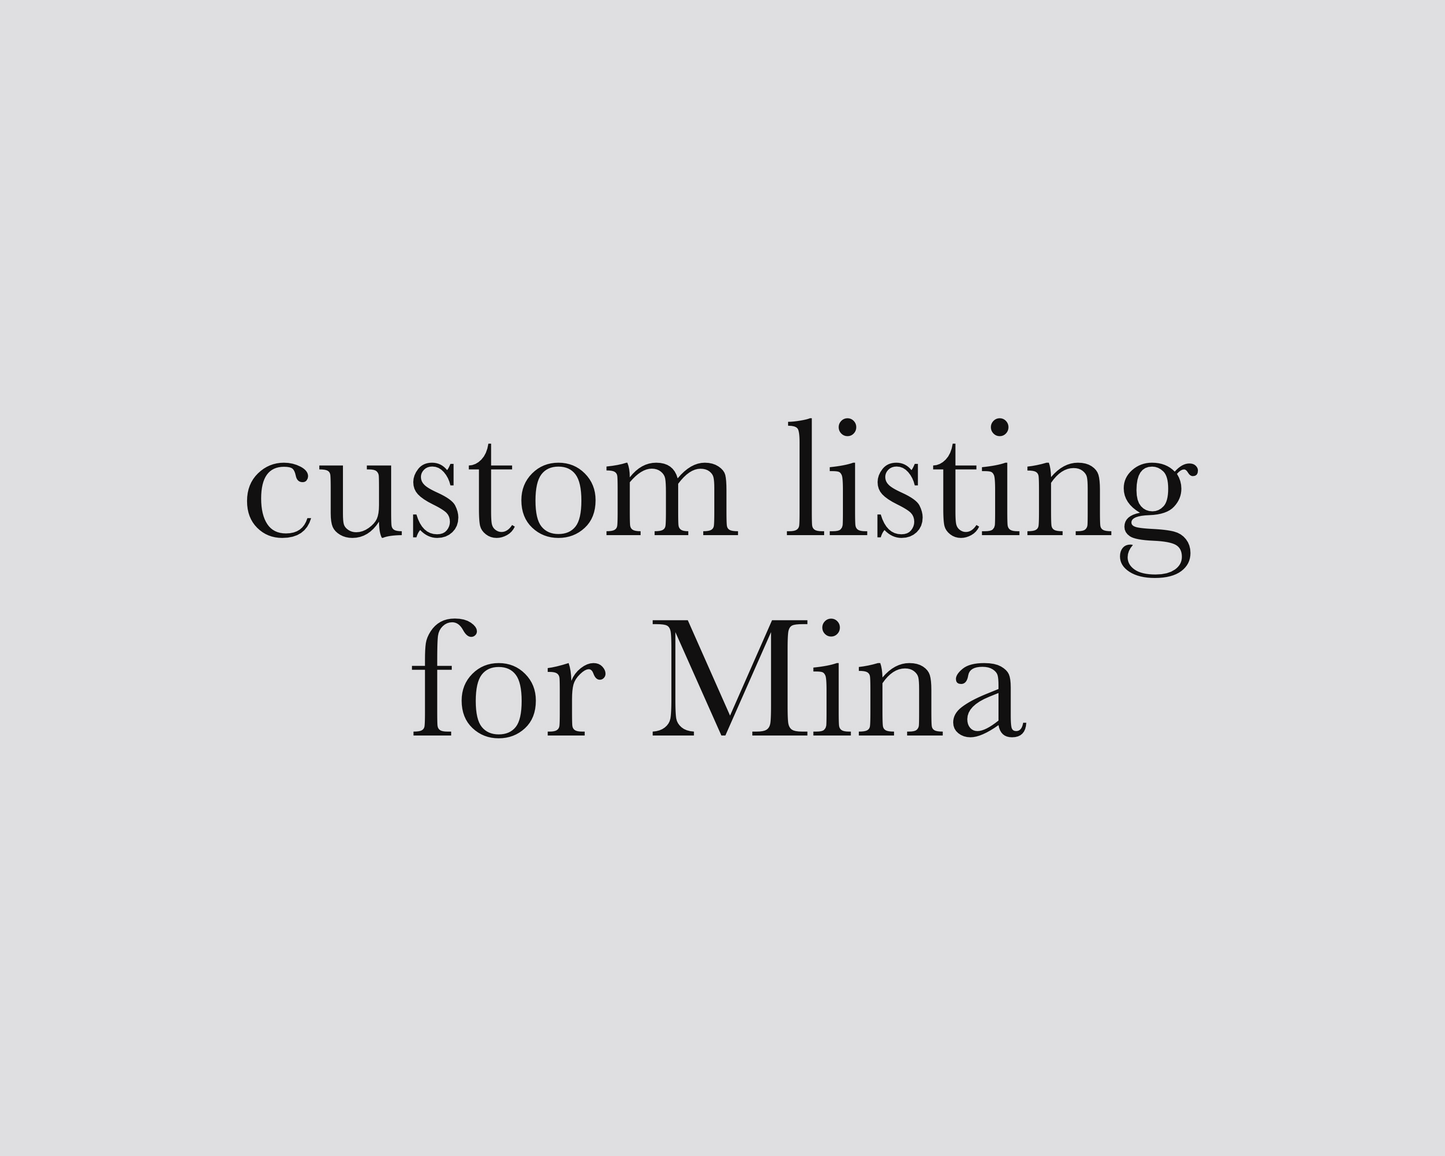 Custom listing for Mina